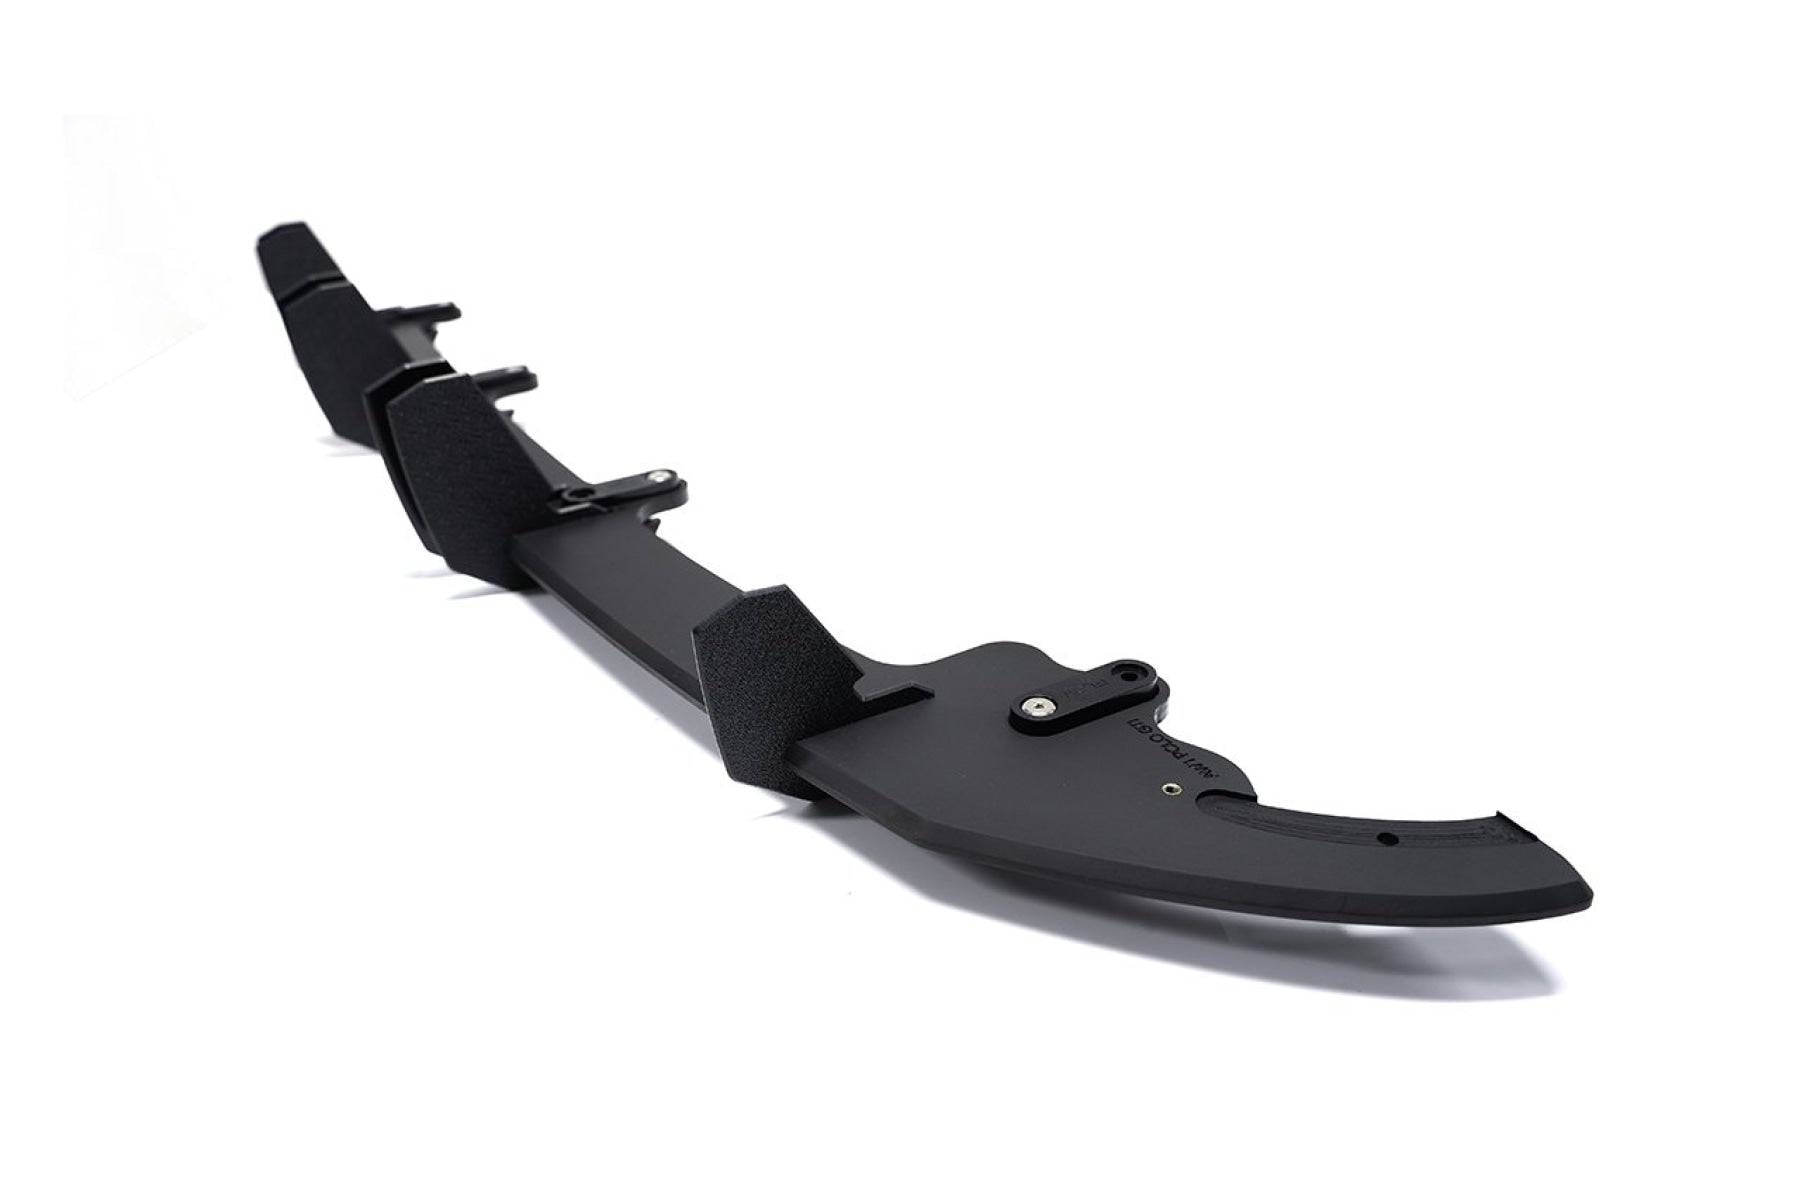 Buy AW Polo GTI Flow-Lock Rear Diffuser Online